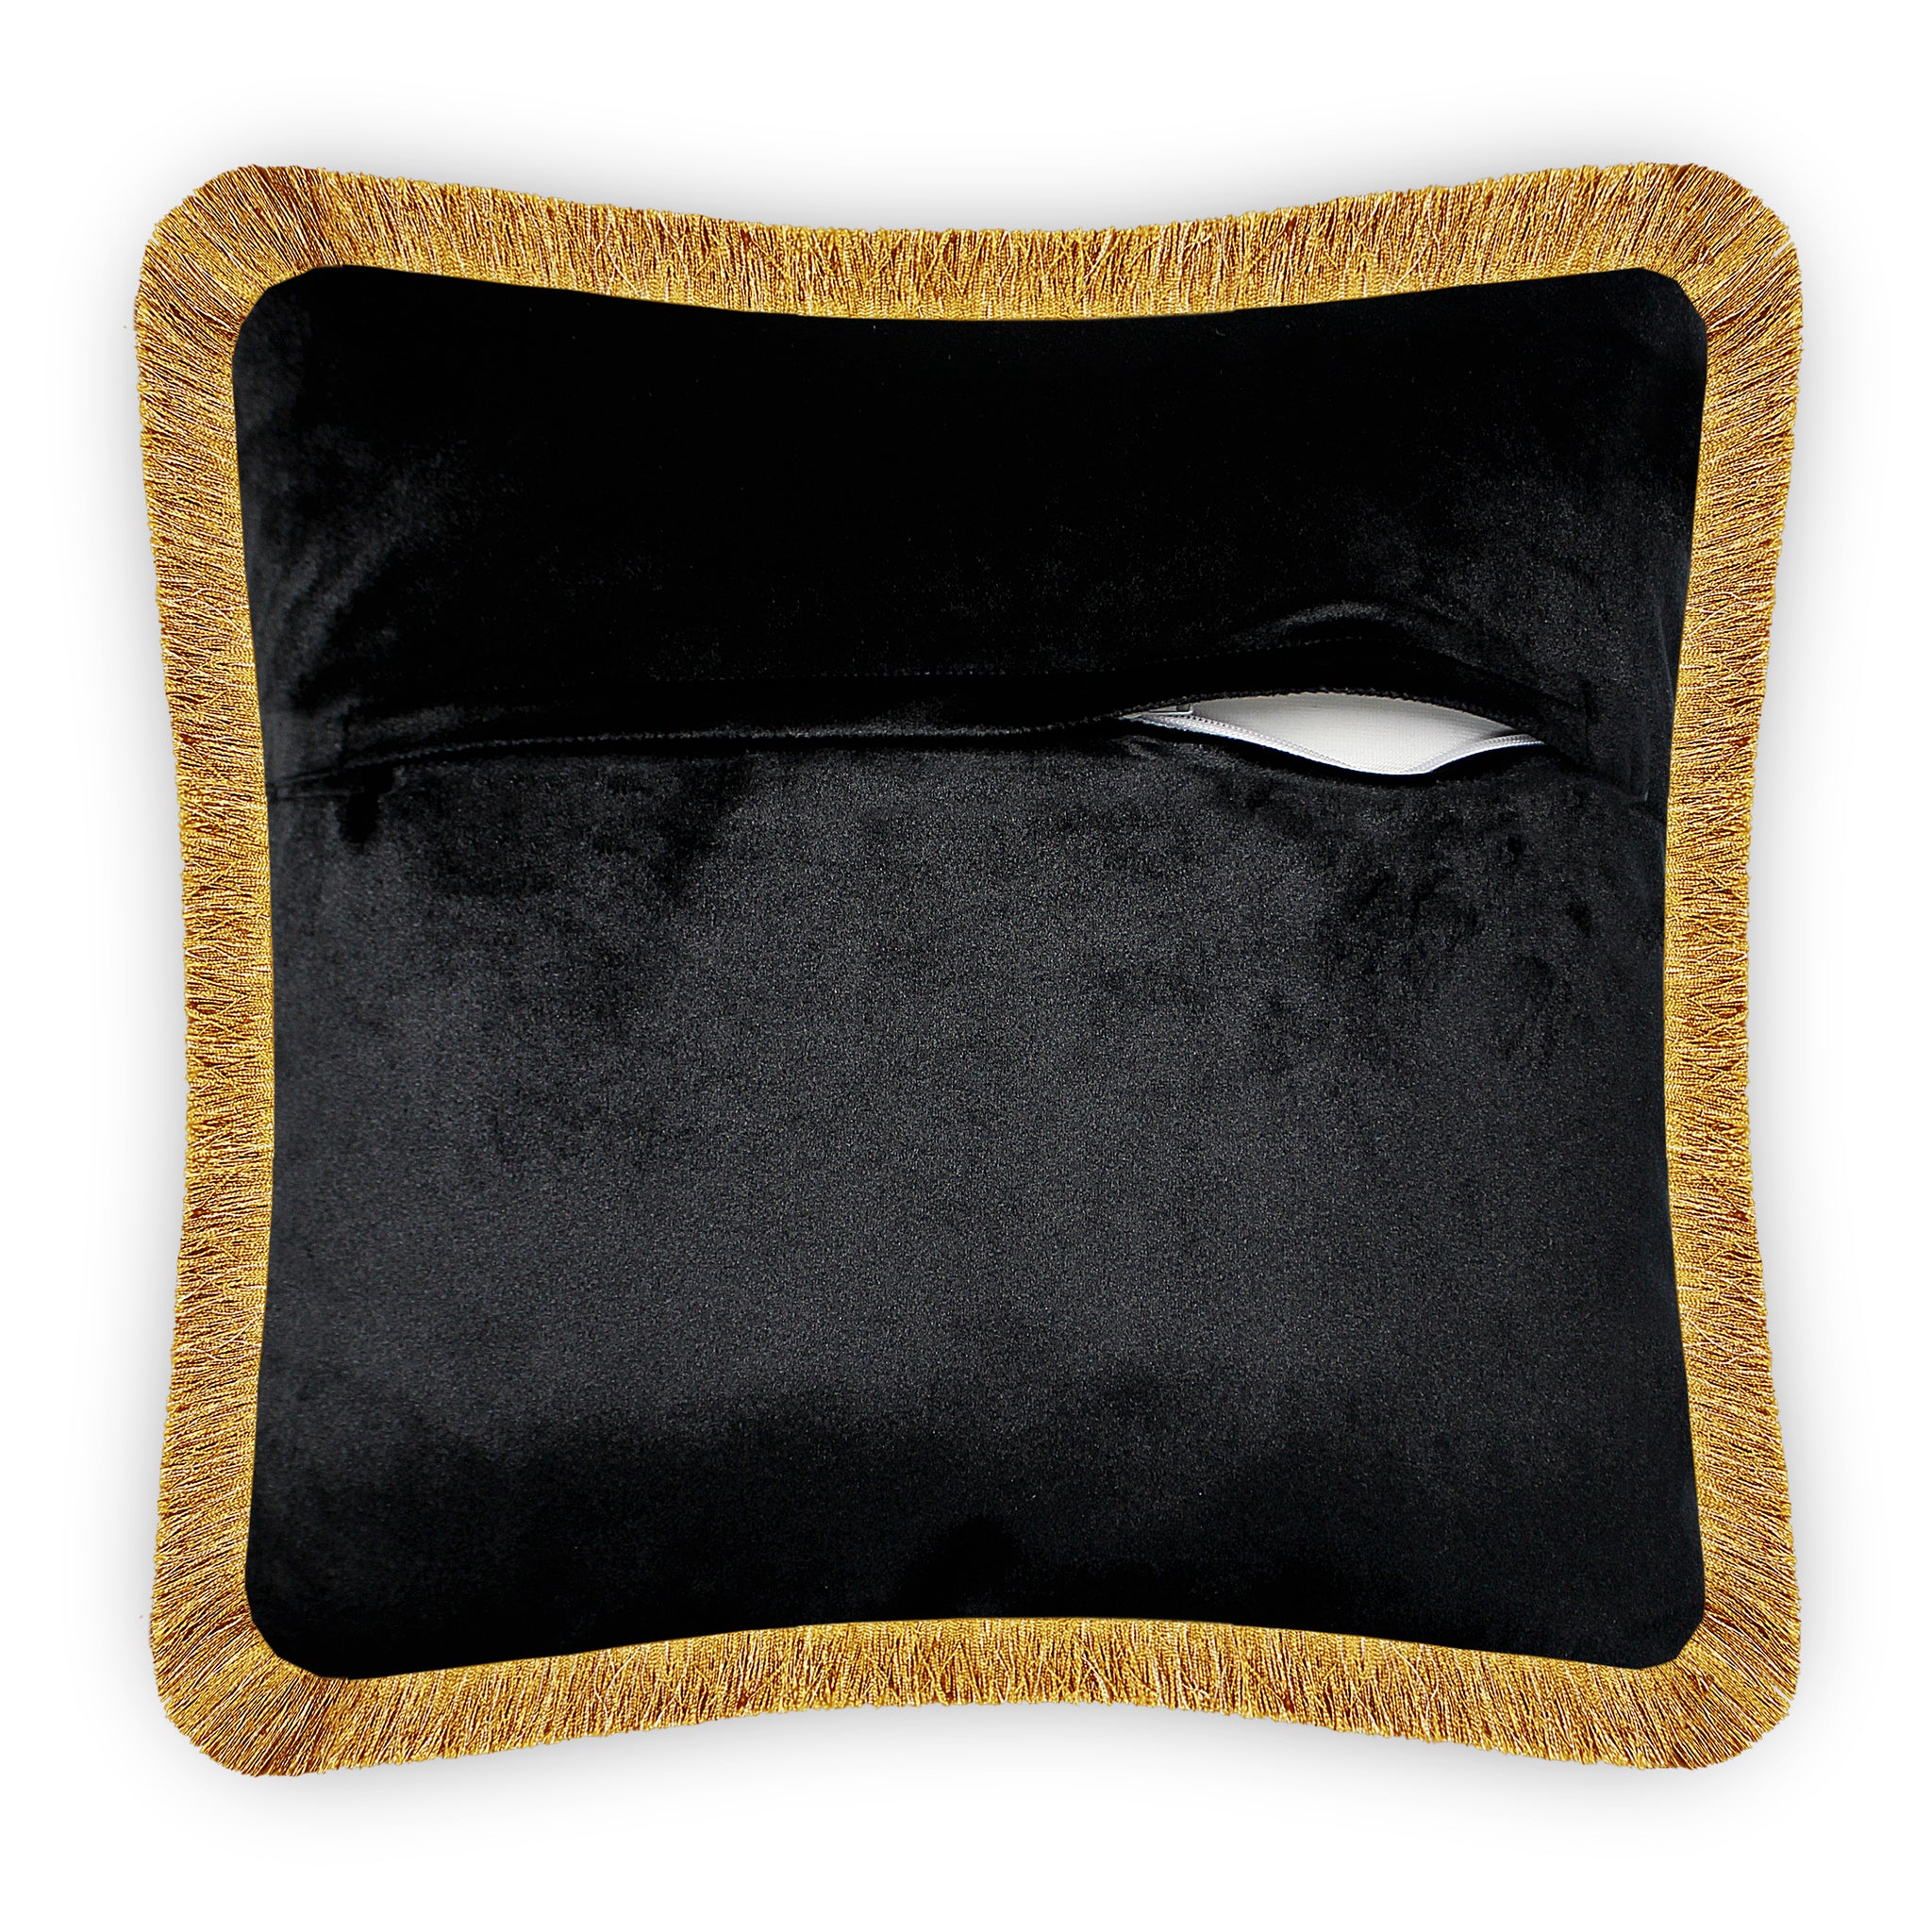  Velvet Cushion Cover Macaw Parrot Decorative Pillowcase Modern Home Decor Throw Pillow for Sofa Chair 45x45 cm 